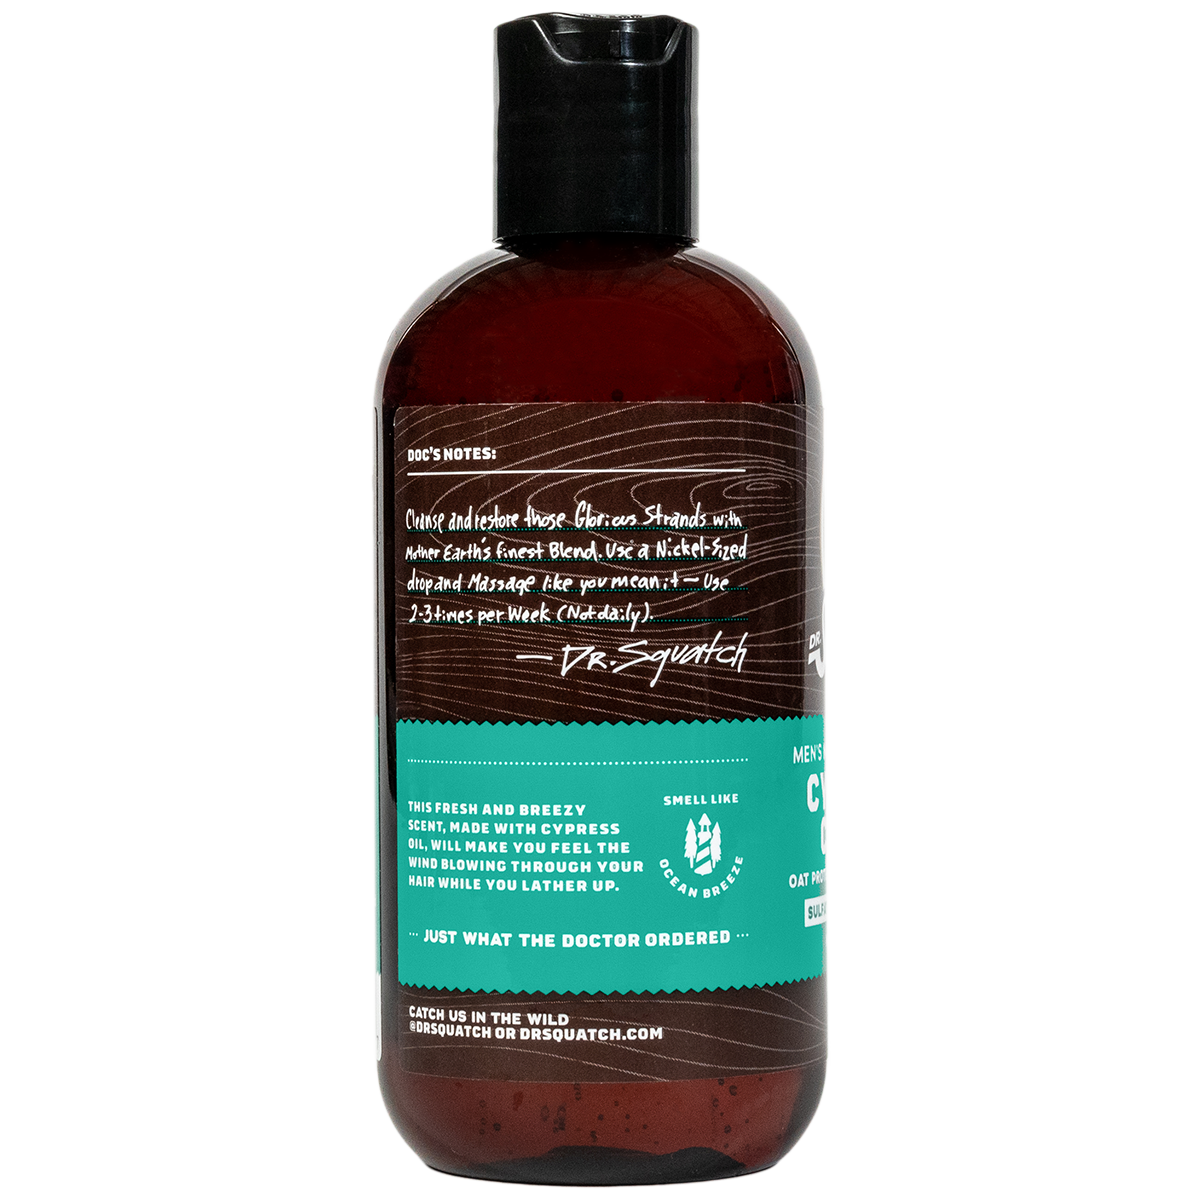 Dr. Squatch Citrus & Cypress Men's Shampoo + Conditioner Hair